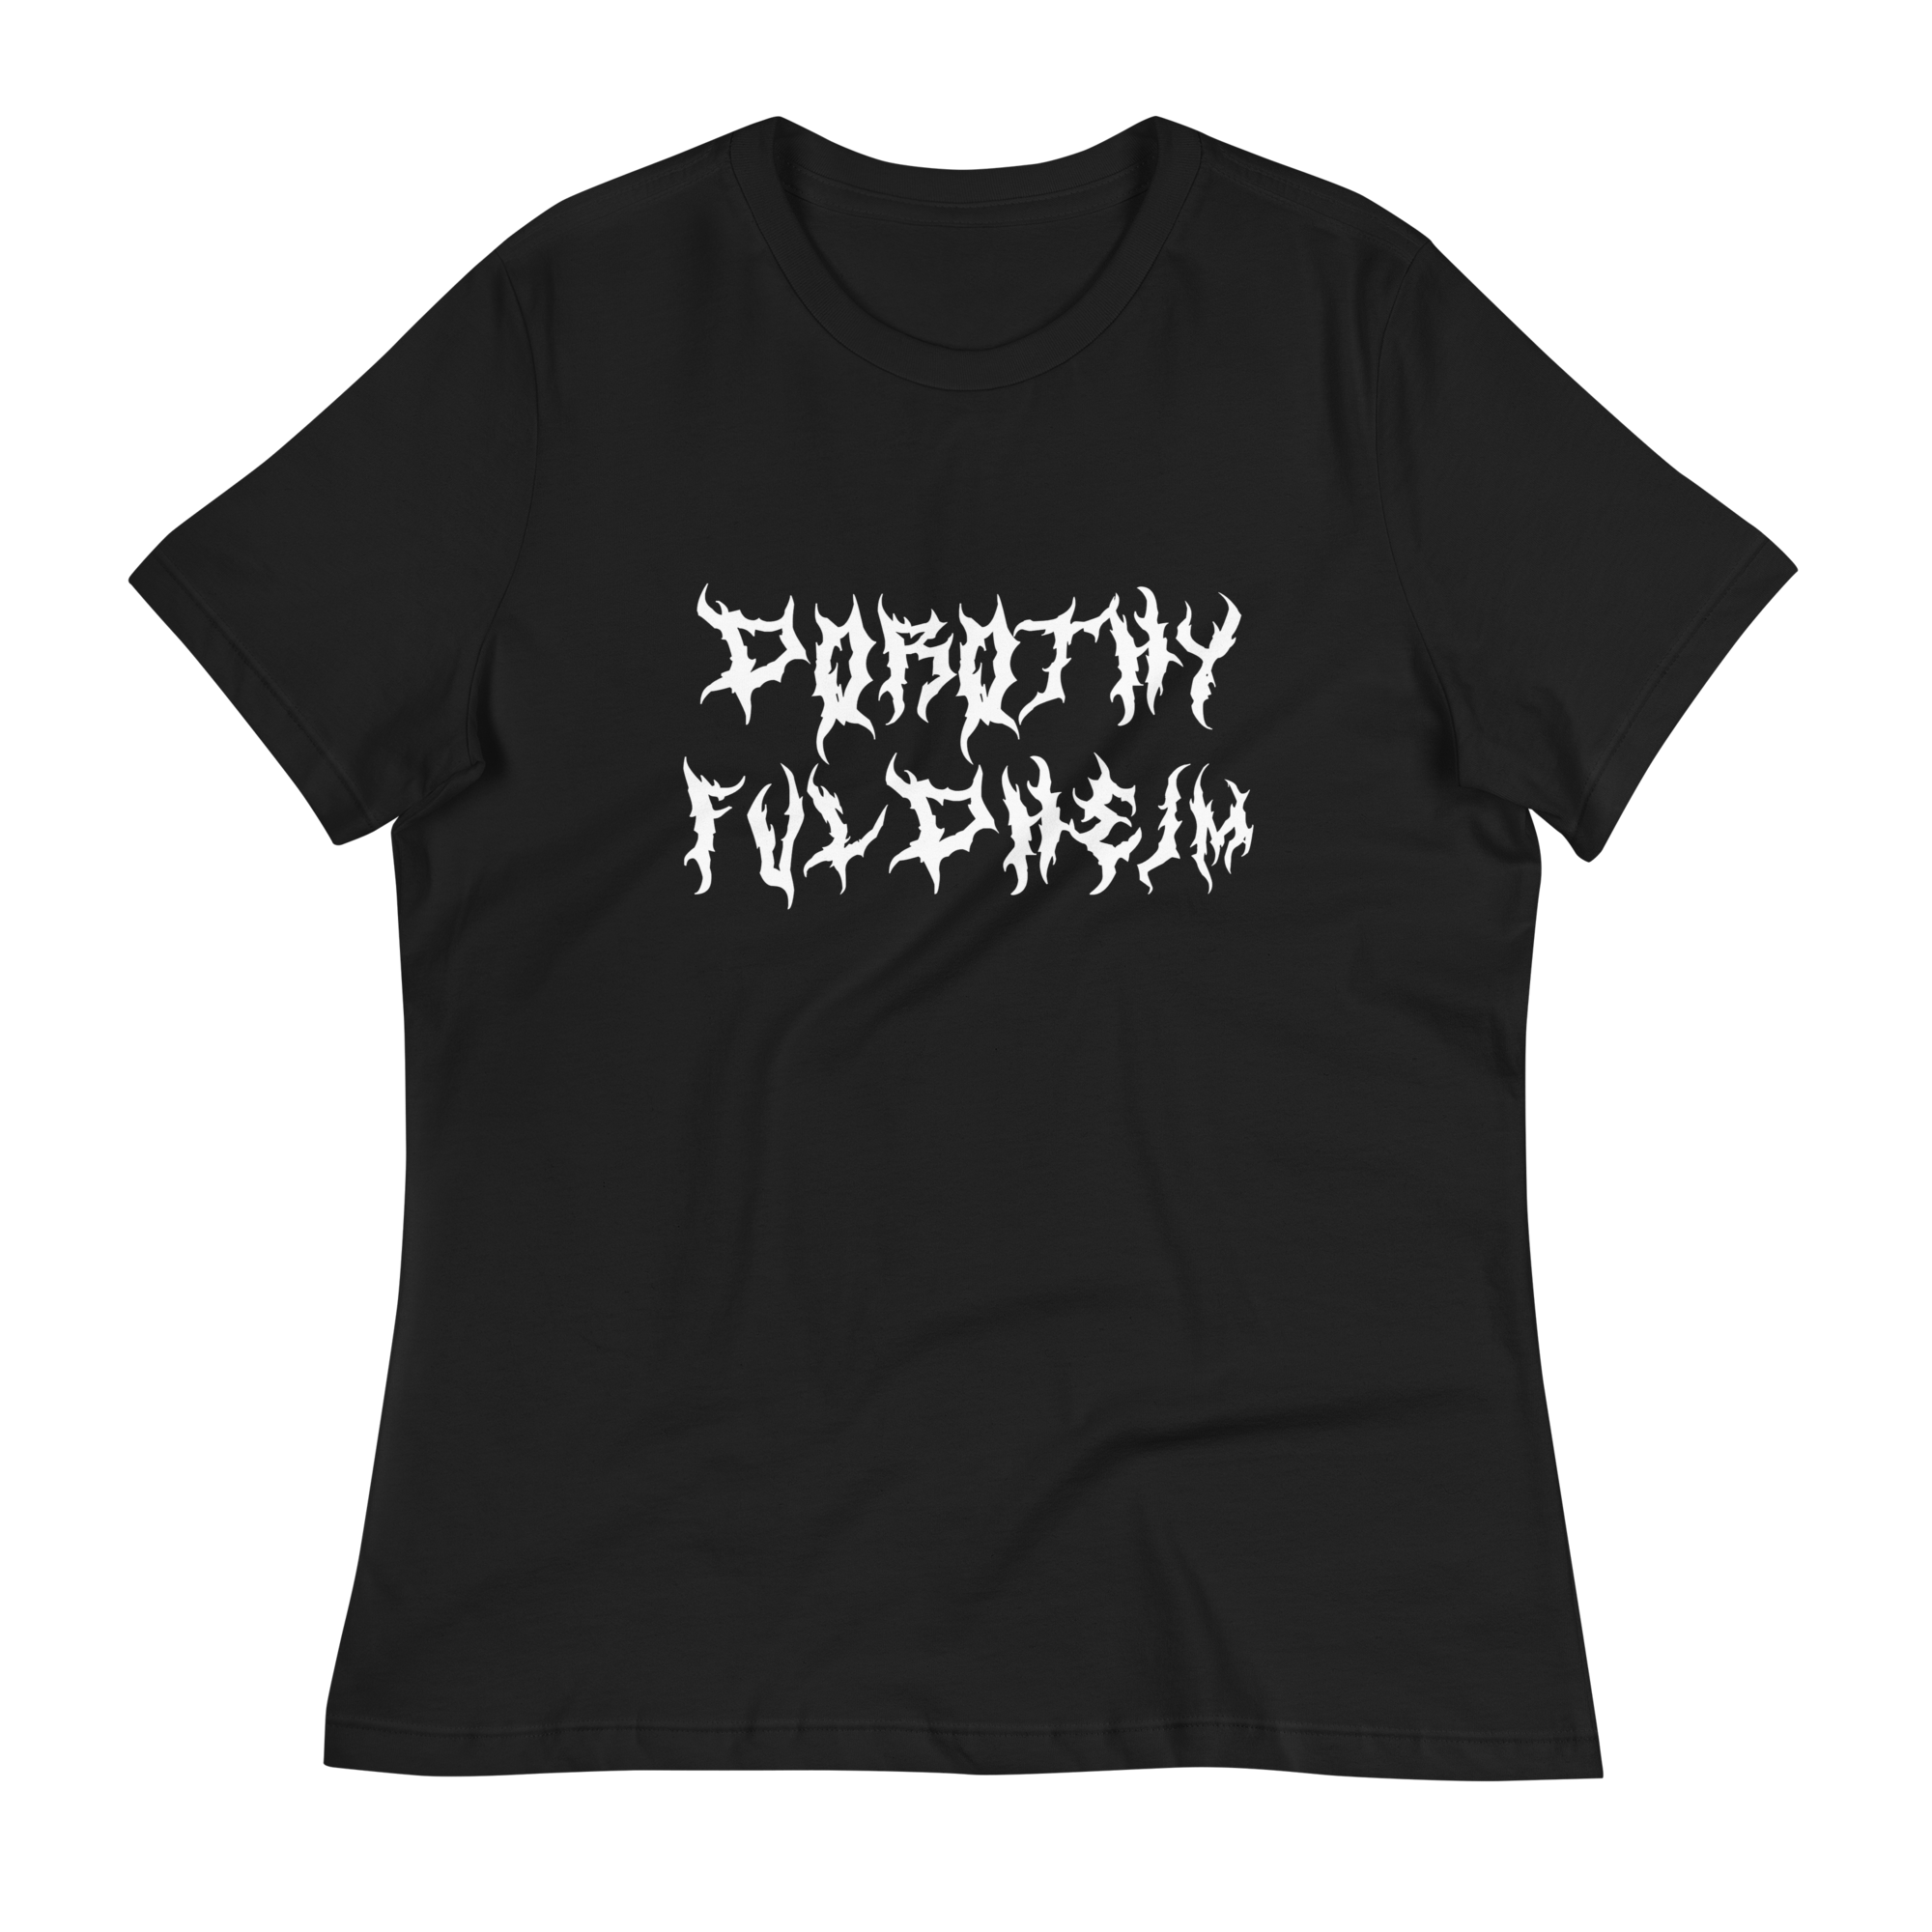 Dorothy Fuldheim Women's T-Shirt